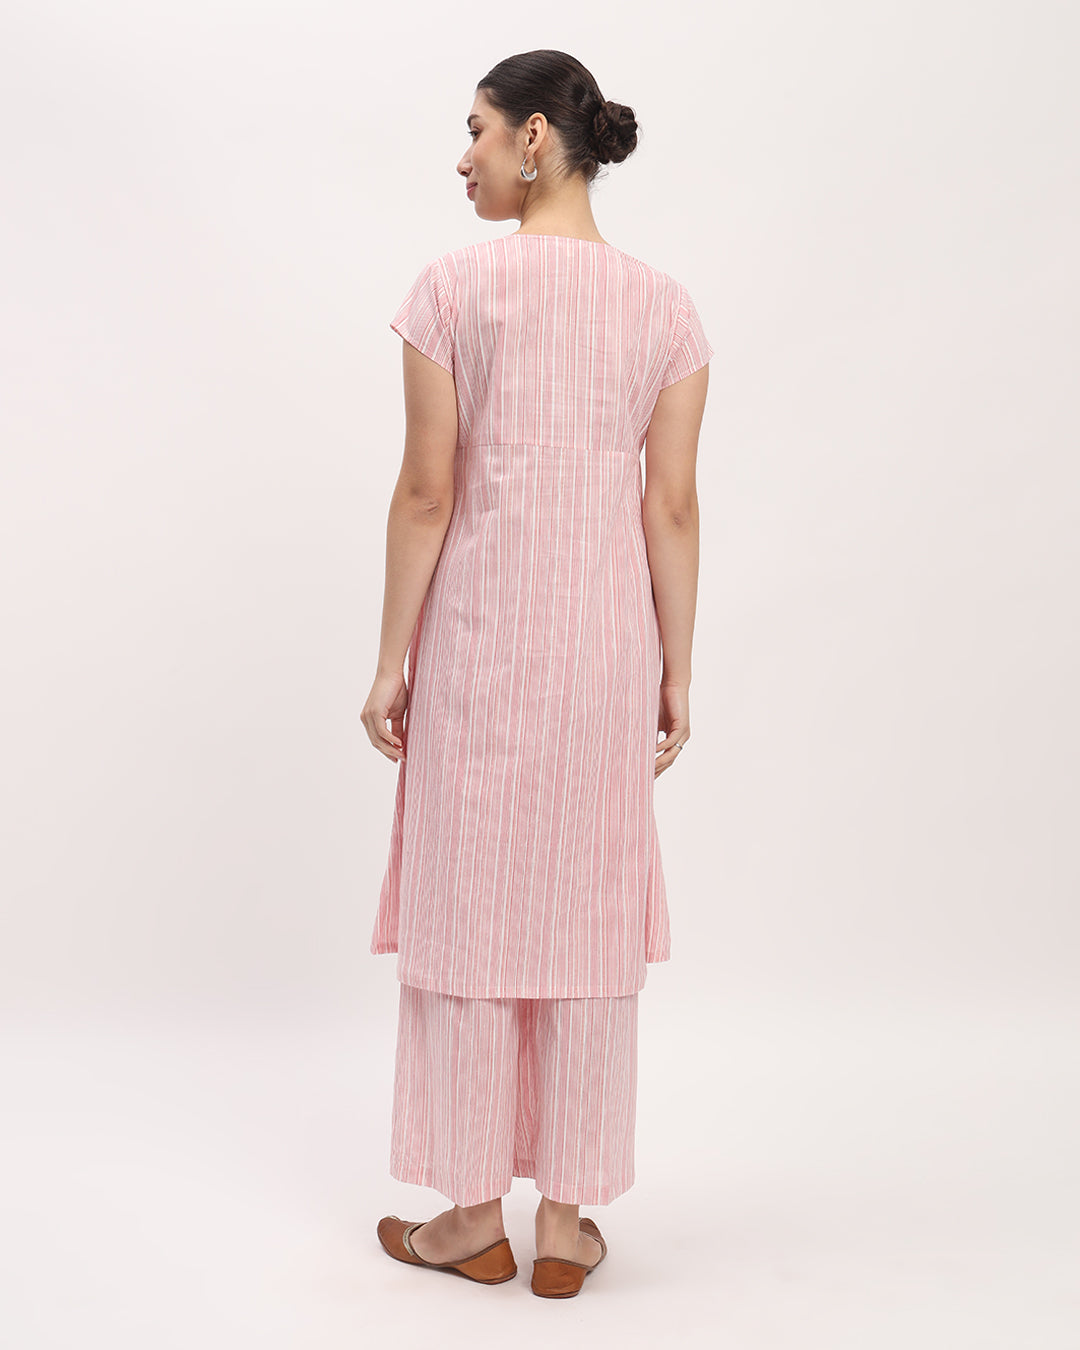 Combo: Pink Chic Lines & Blue Tiffany Voguish Verve V Neck Printed Kurta (Without Bottoms)